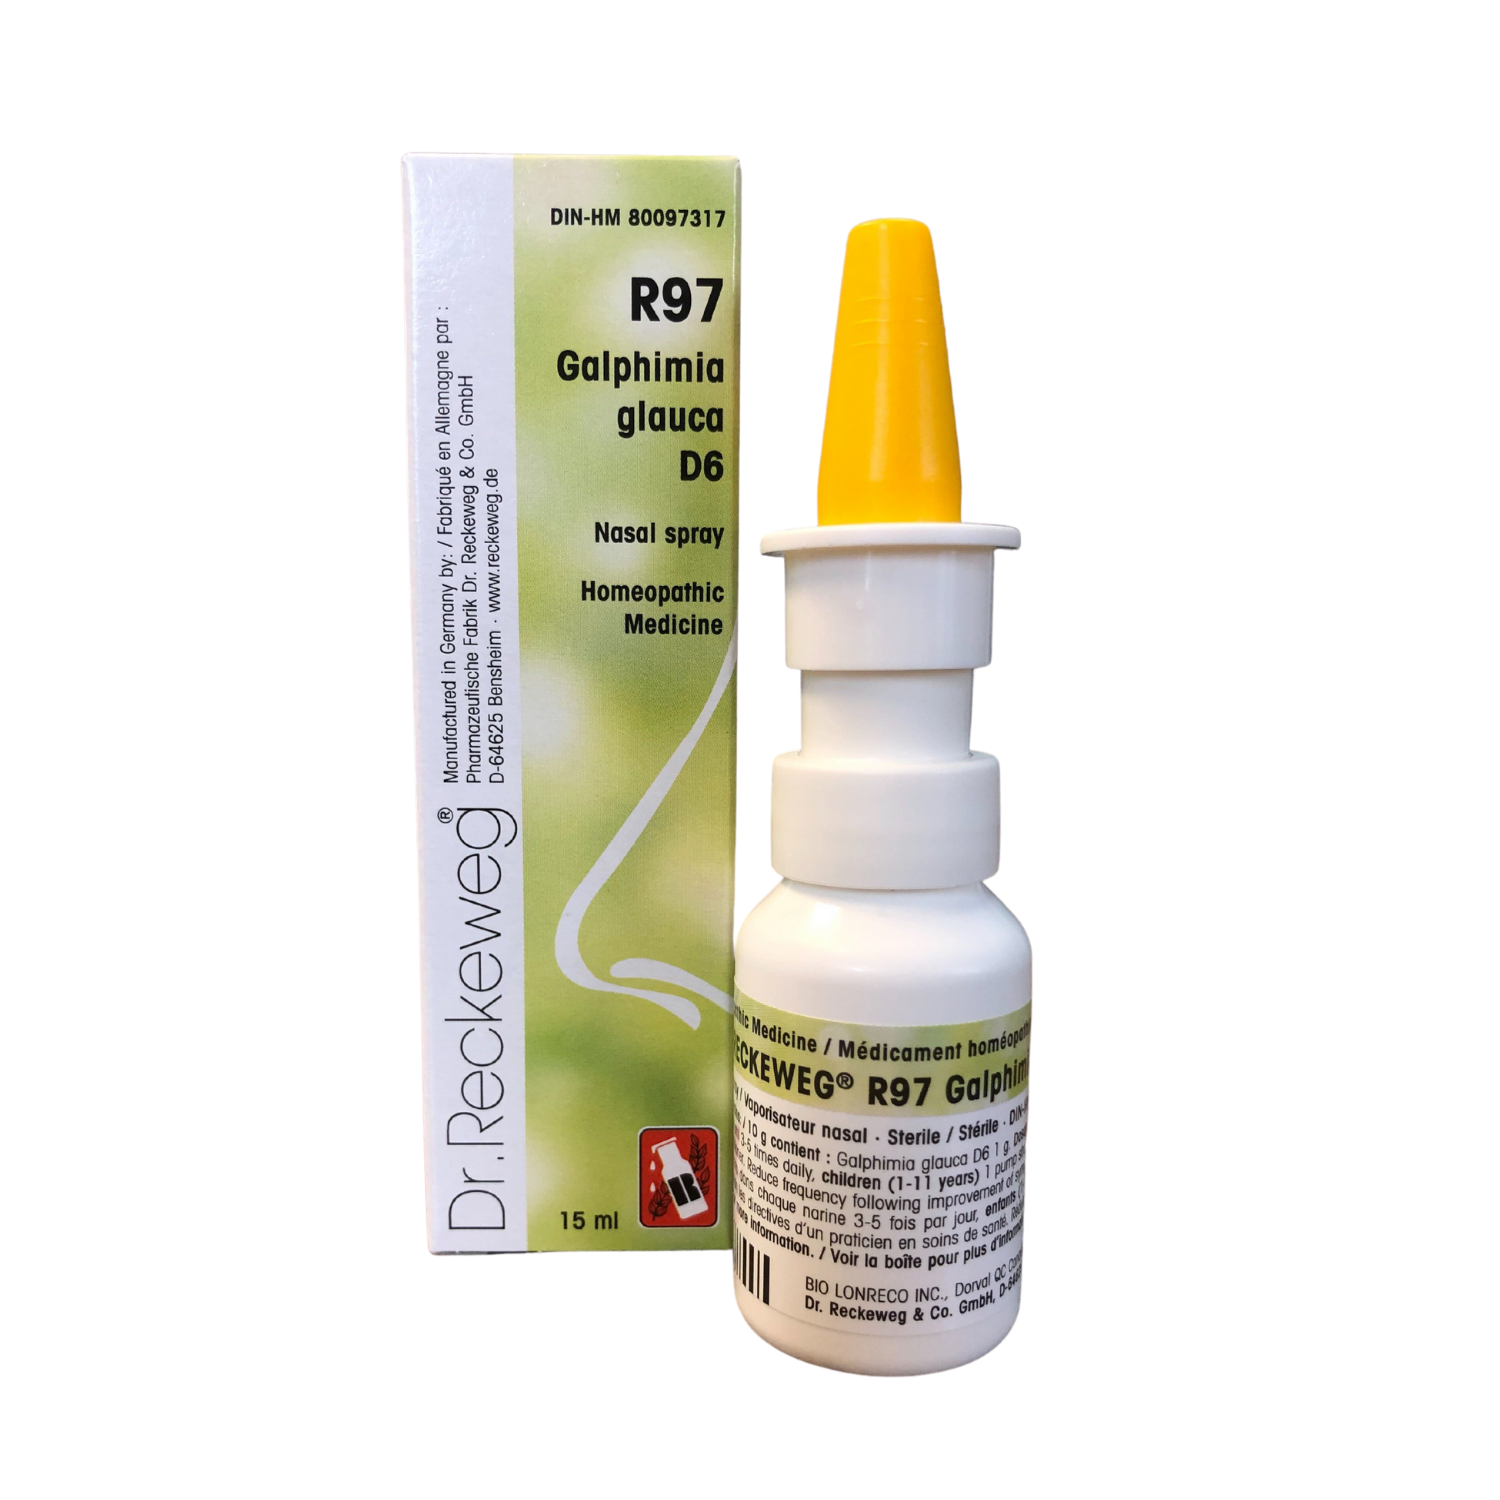 R97 Galphimia glauca D6  Homeopathic medicine  Nasal spray  15 ml